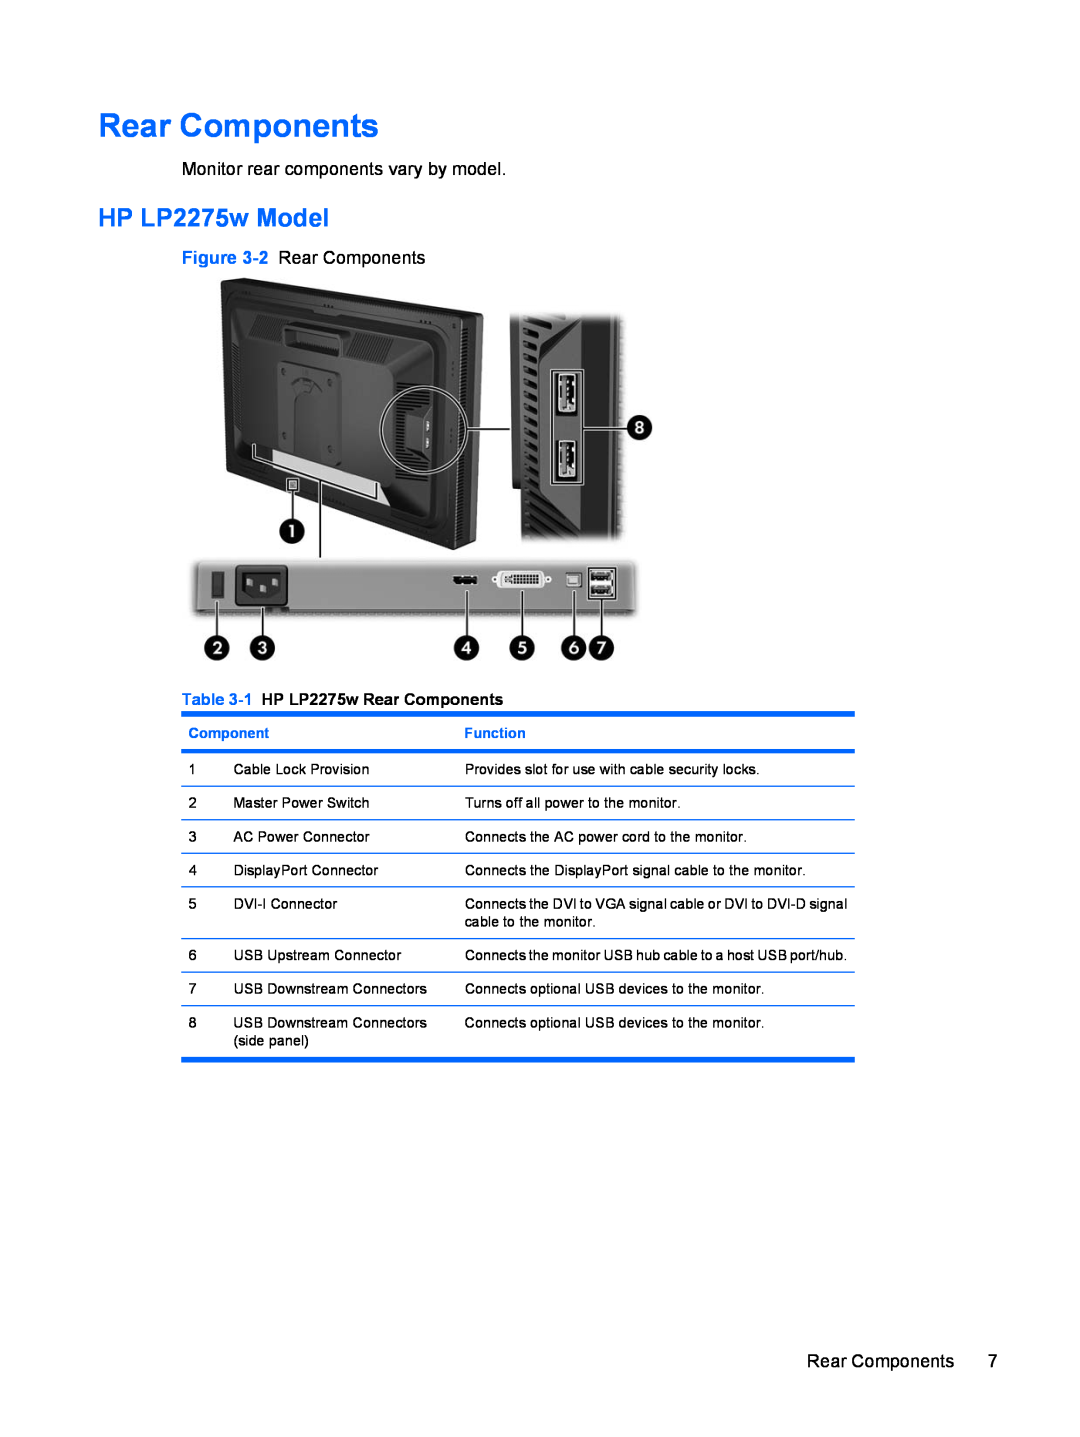 HP manual HP LP2275w Model, 1 HP LP2275w Rear Components, Function 